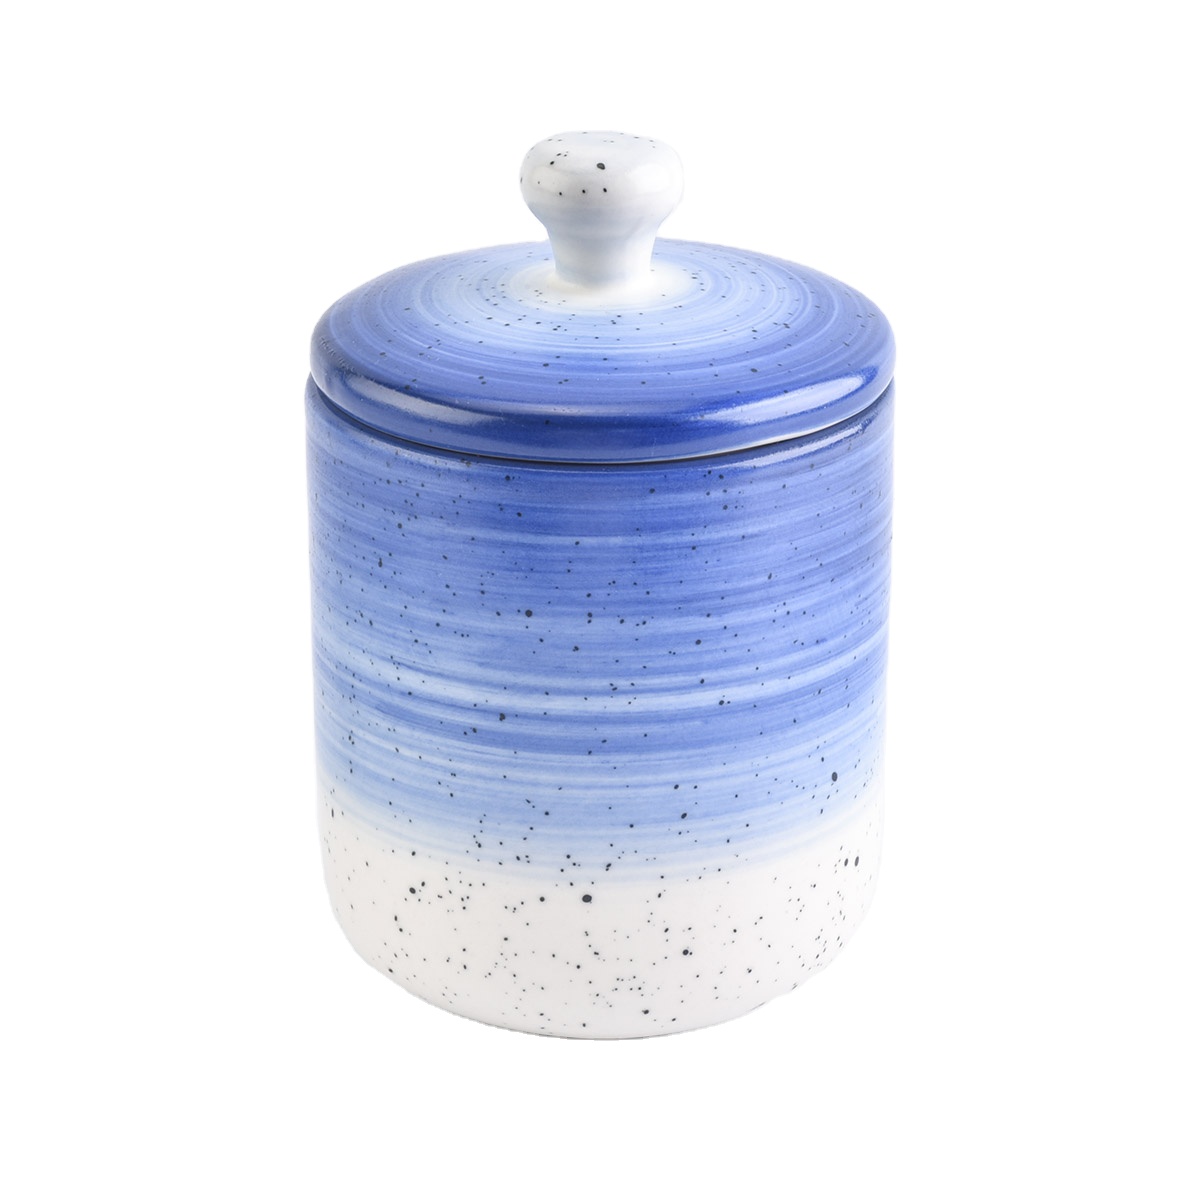 Sunny Custom decorative blue ceramic candle holder with lid